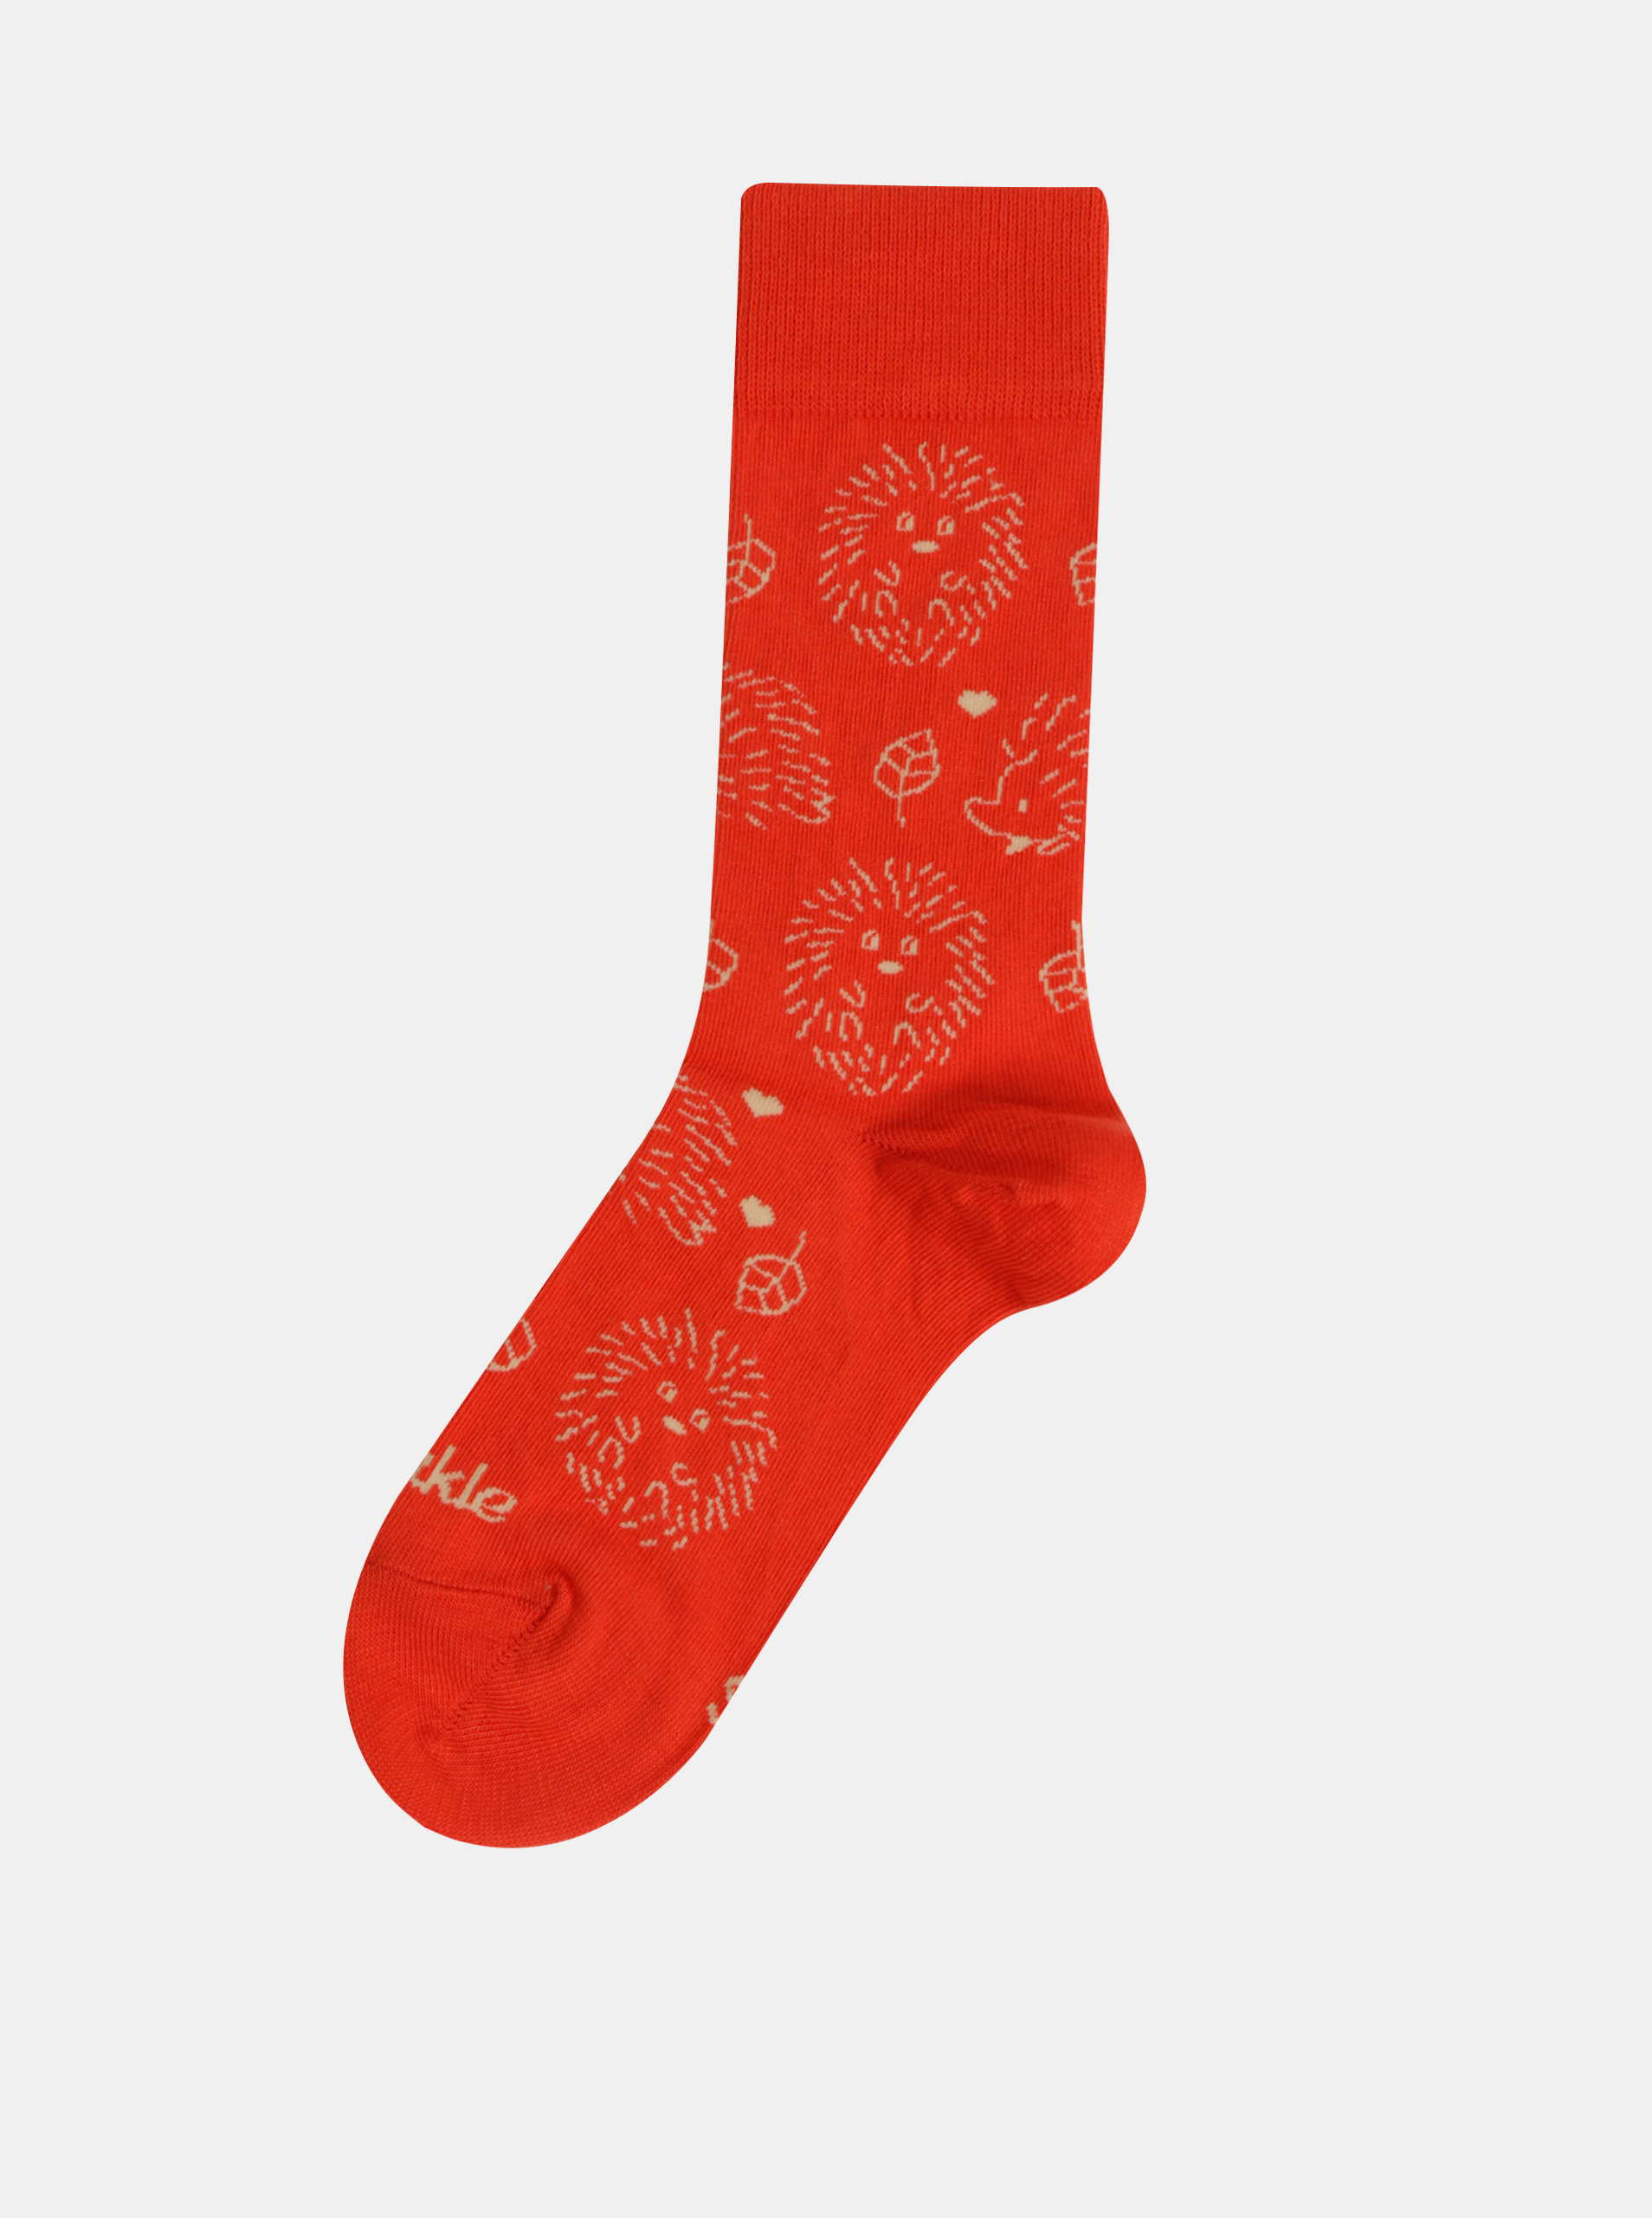 Fotografie Červené vzorované ponožky Fusakle V zahradě Fusakle A22:558691_3626